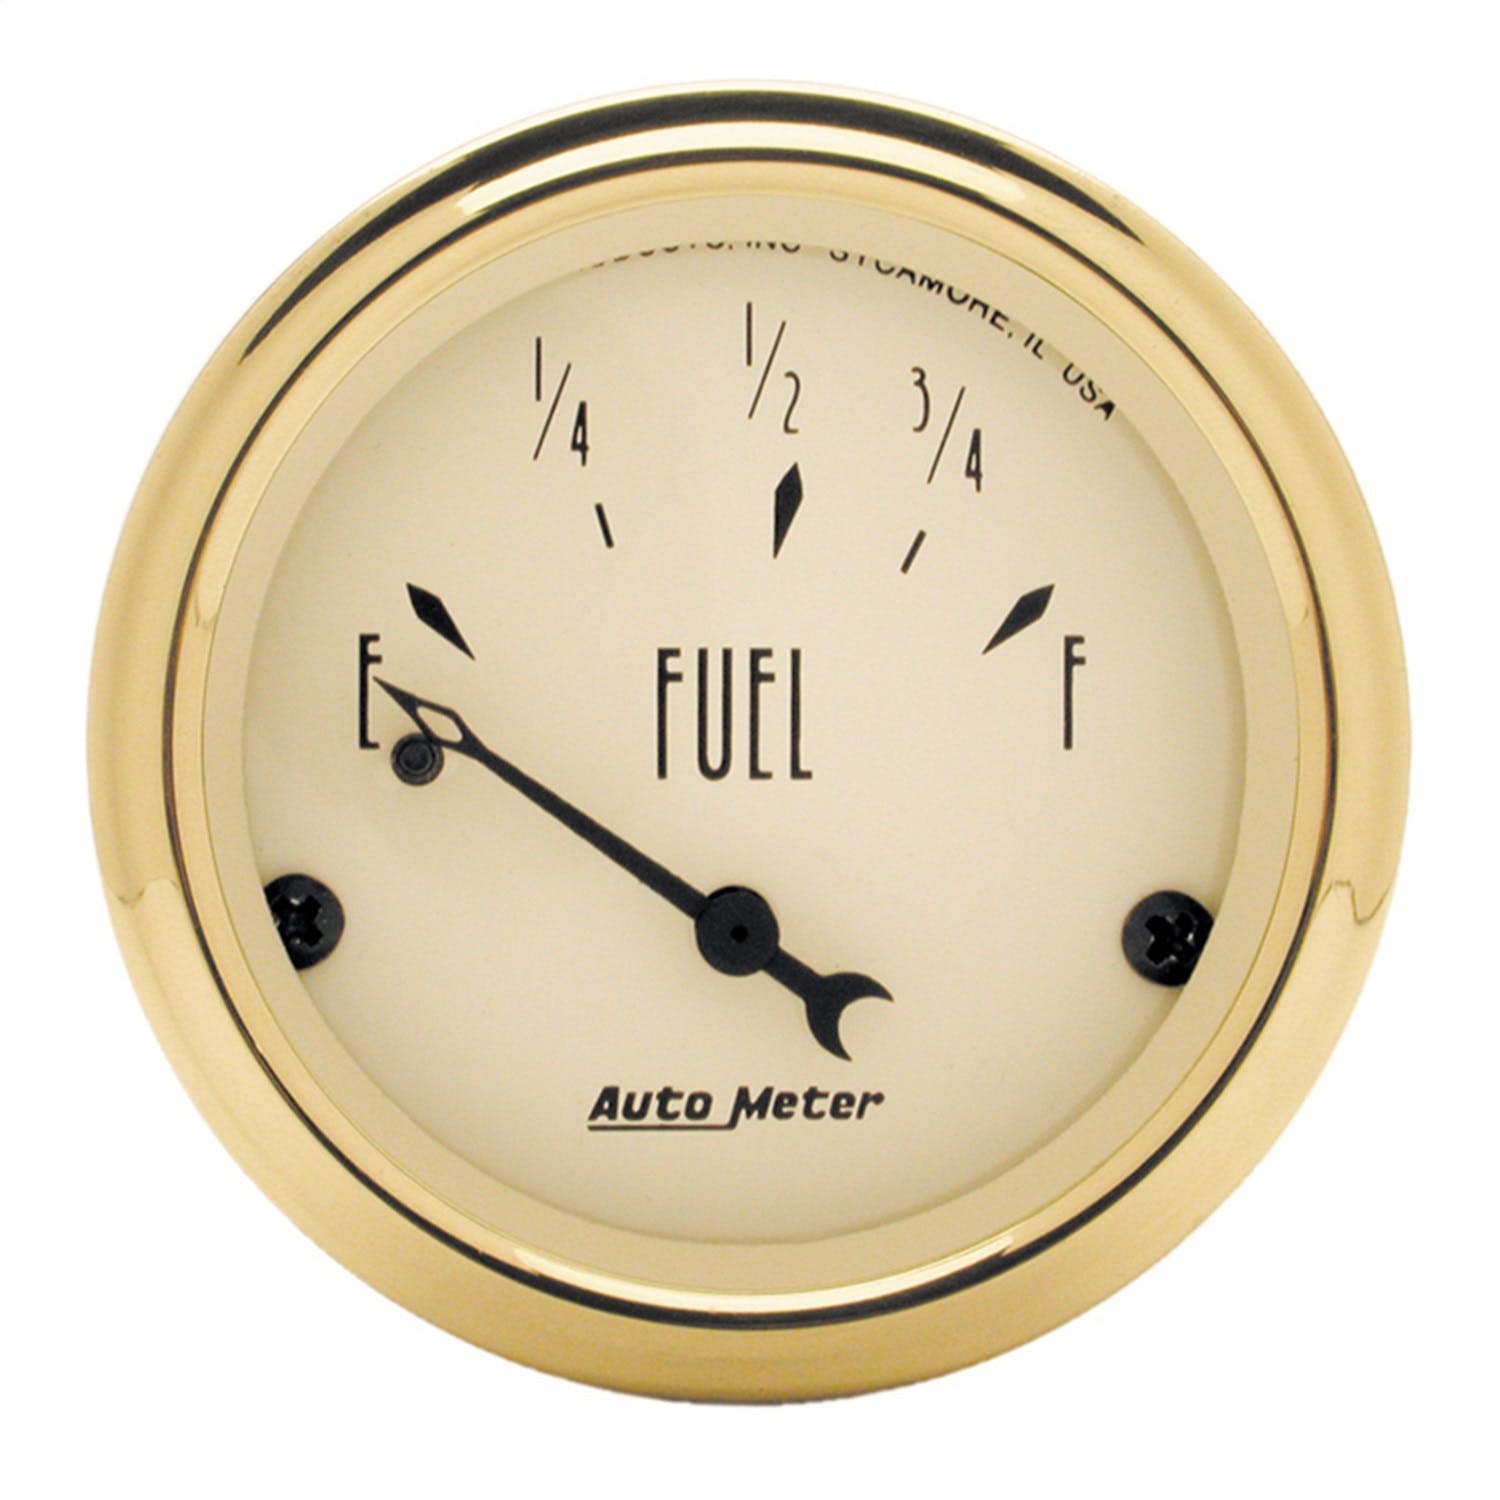 AutoMeter Products 1505 Fuel Level Gauge 73 E/8-12 F